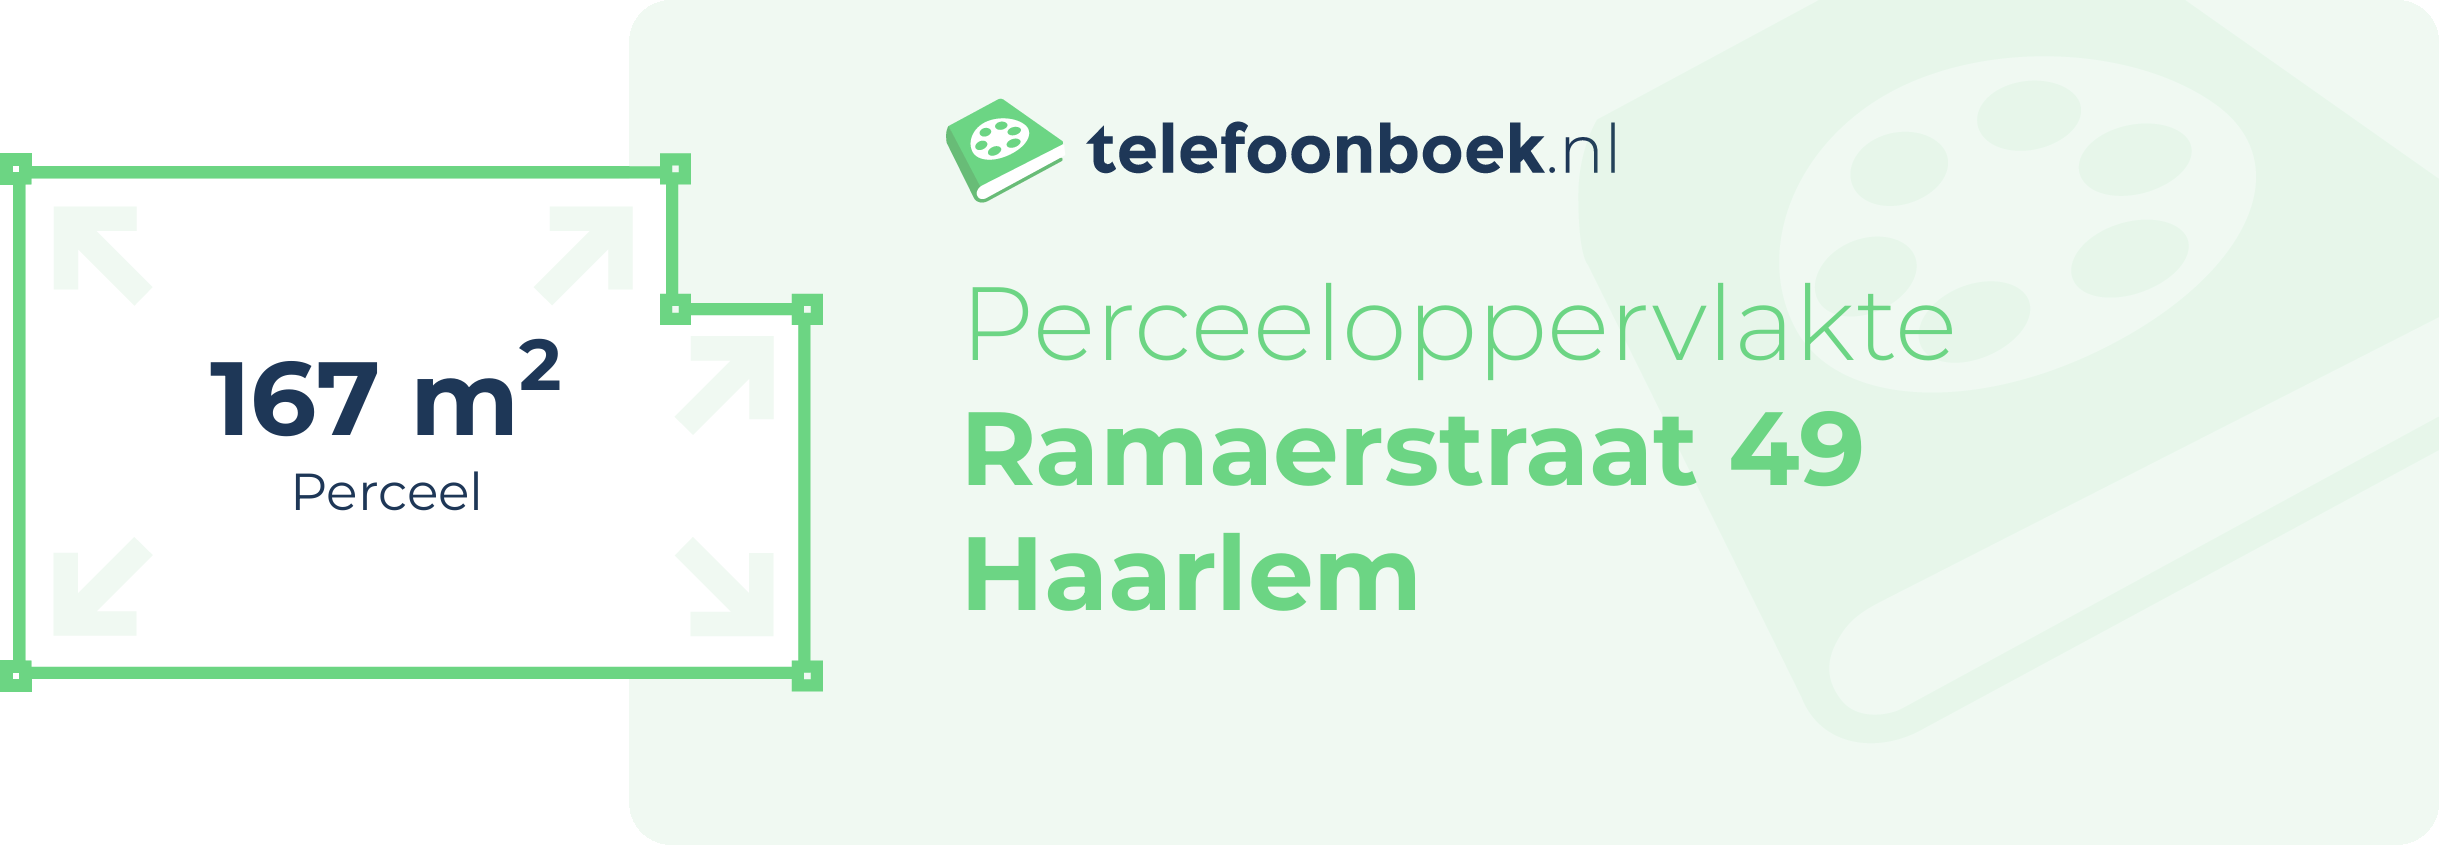 Perceeloppervlakte Ramaerstraat 49 Haarlem